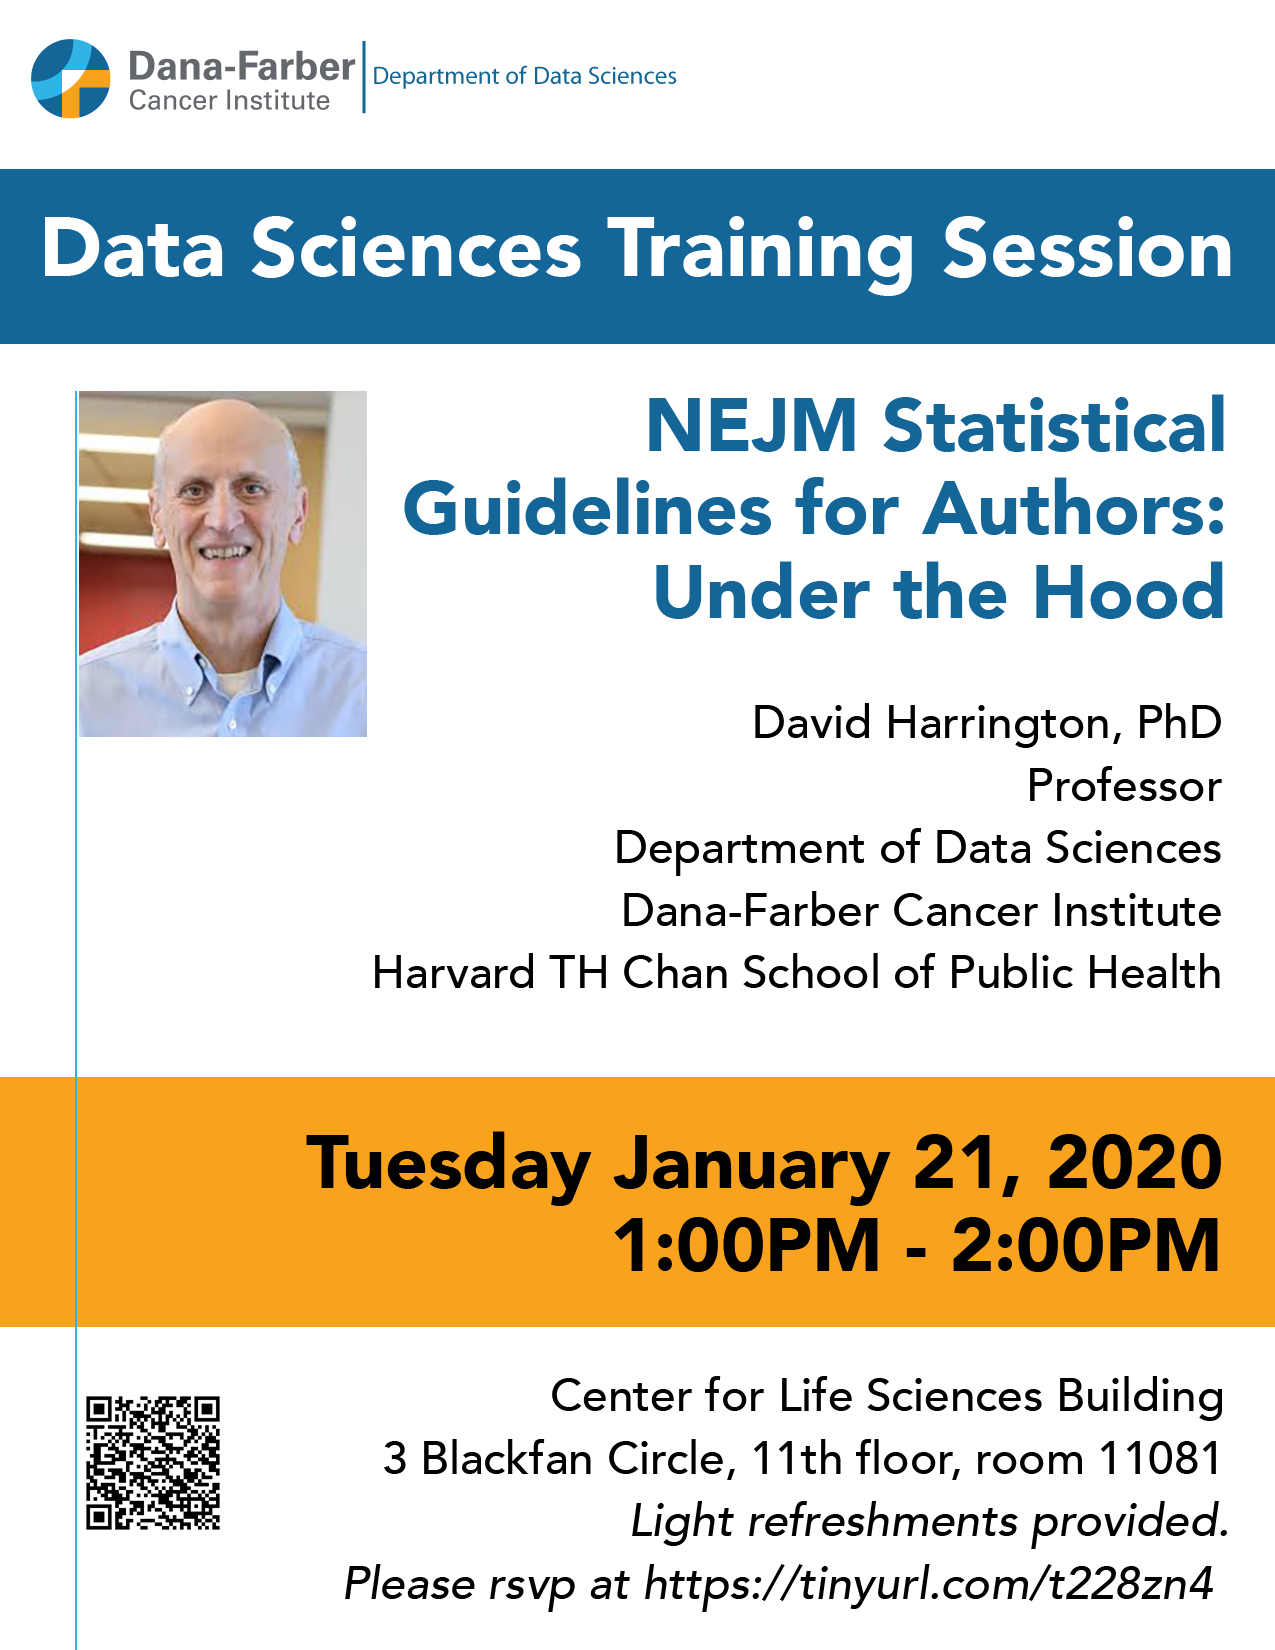 NEJM Statistical Guidelines with David Harrington